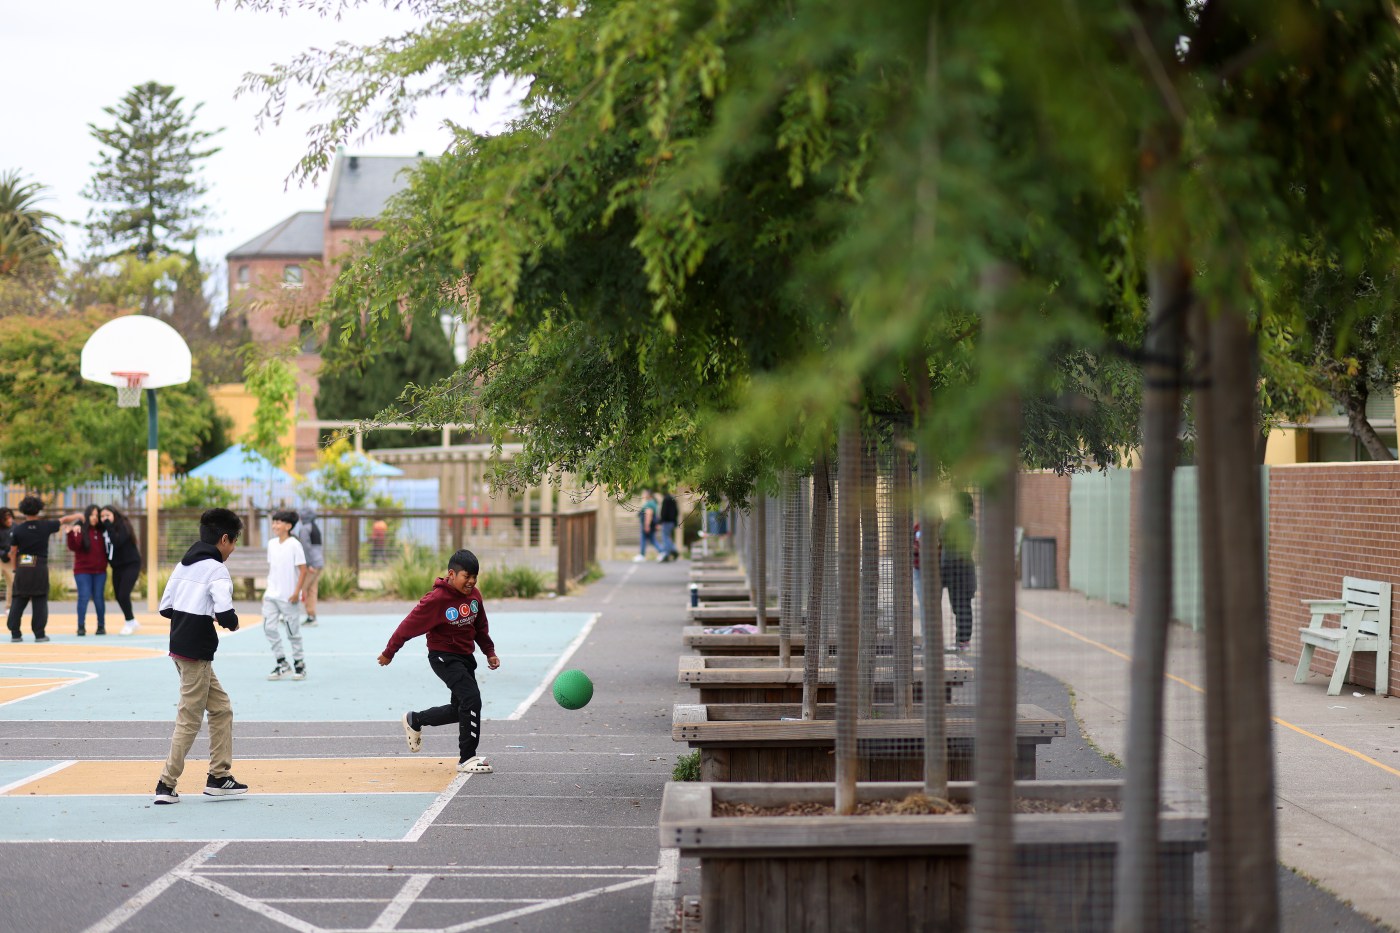 trees,-not-asphalt:-the-$1-billion-effort-to-build-‘cooler’-california-school-playgrounds